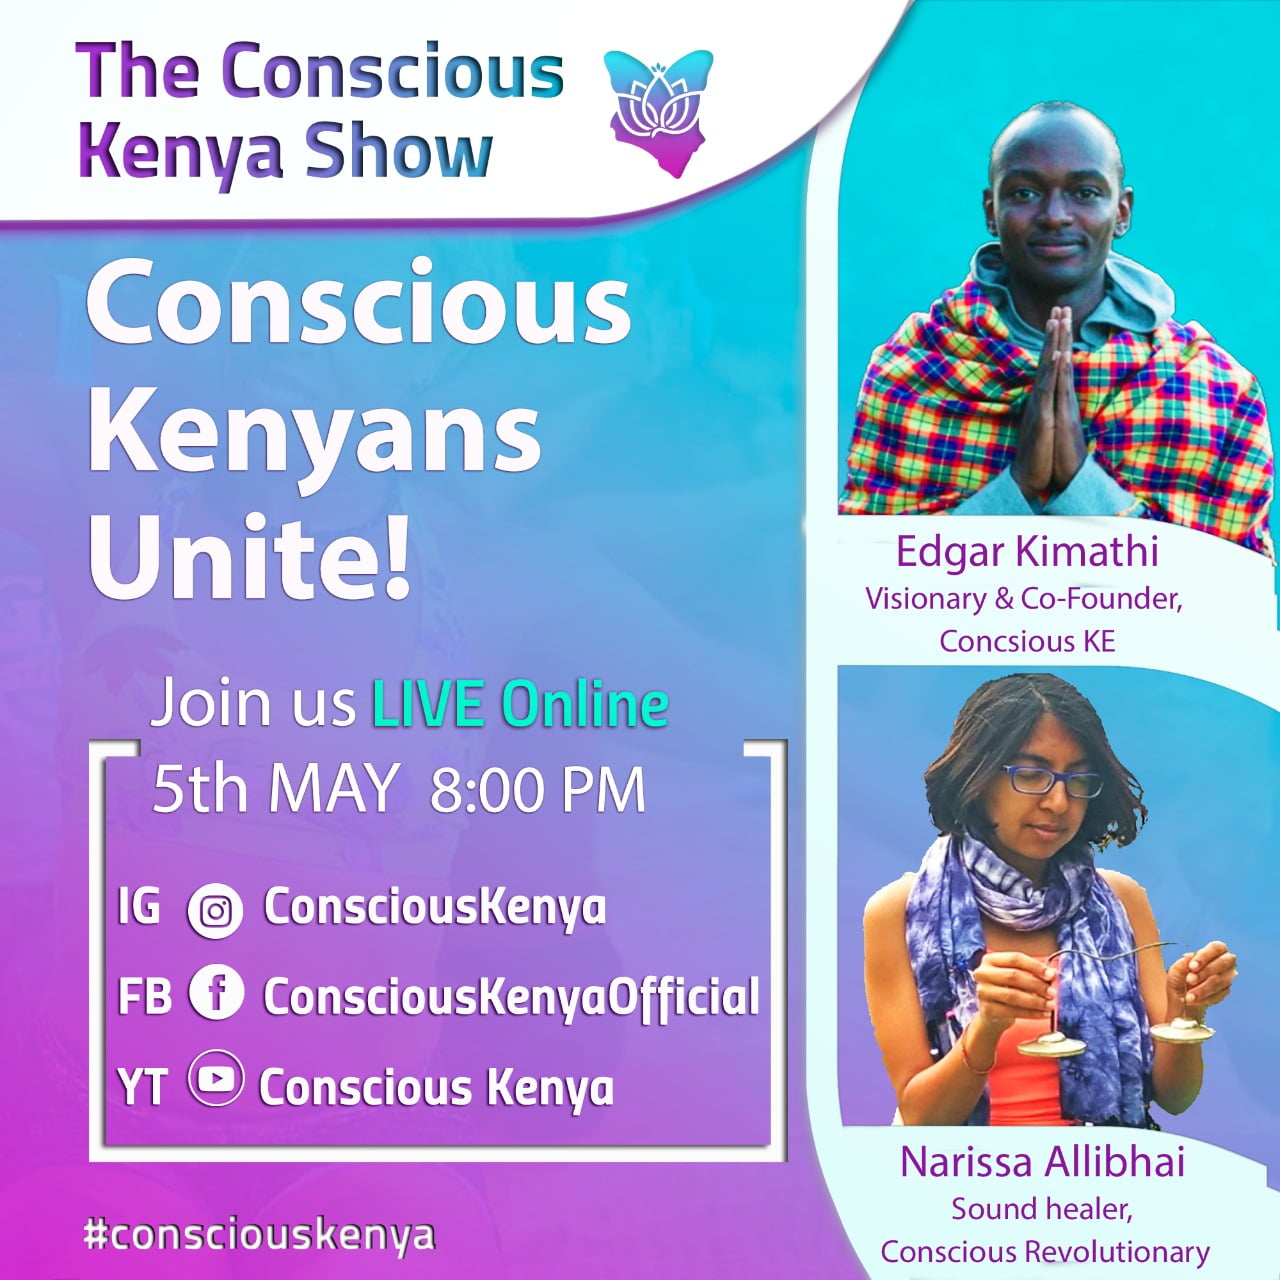 Conscious Kenyans Unite poster for The Conscious Kenya Show